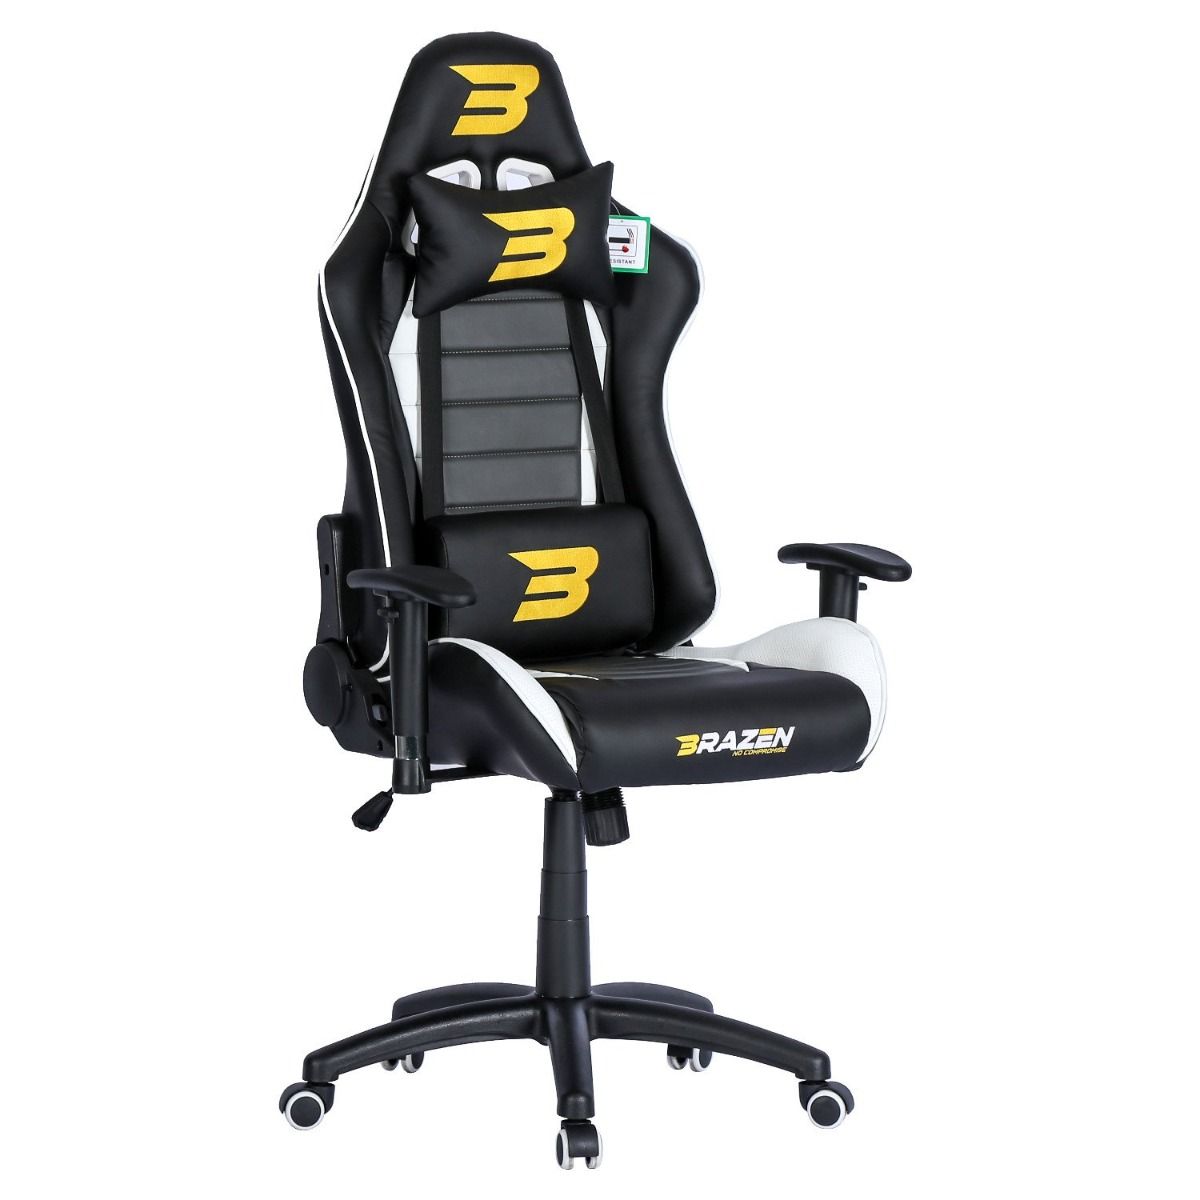 BraZen Sentinel Elite PC Gaming Chair - White